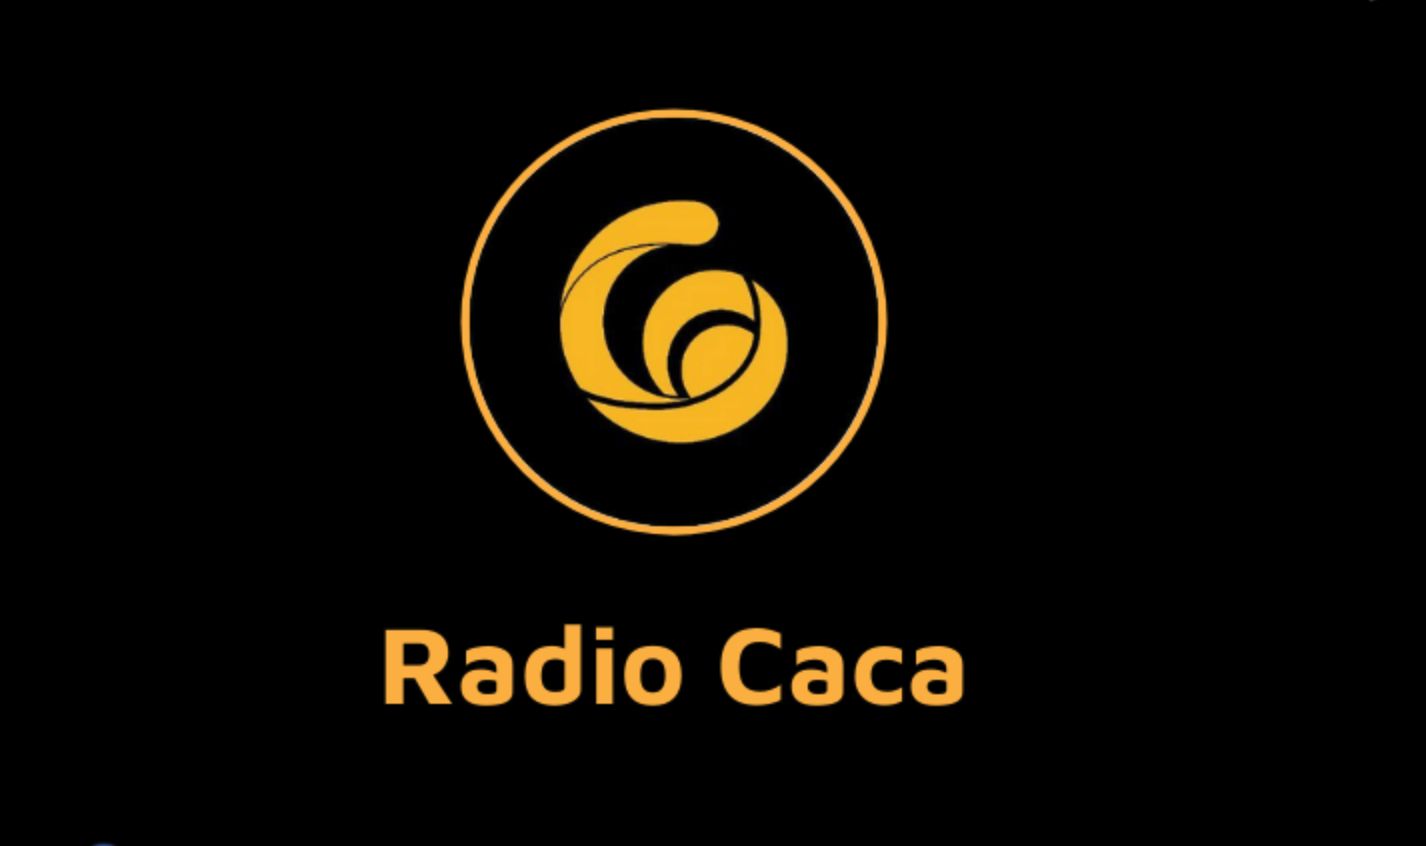 Radio Raca- Metaverse Project